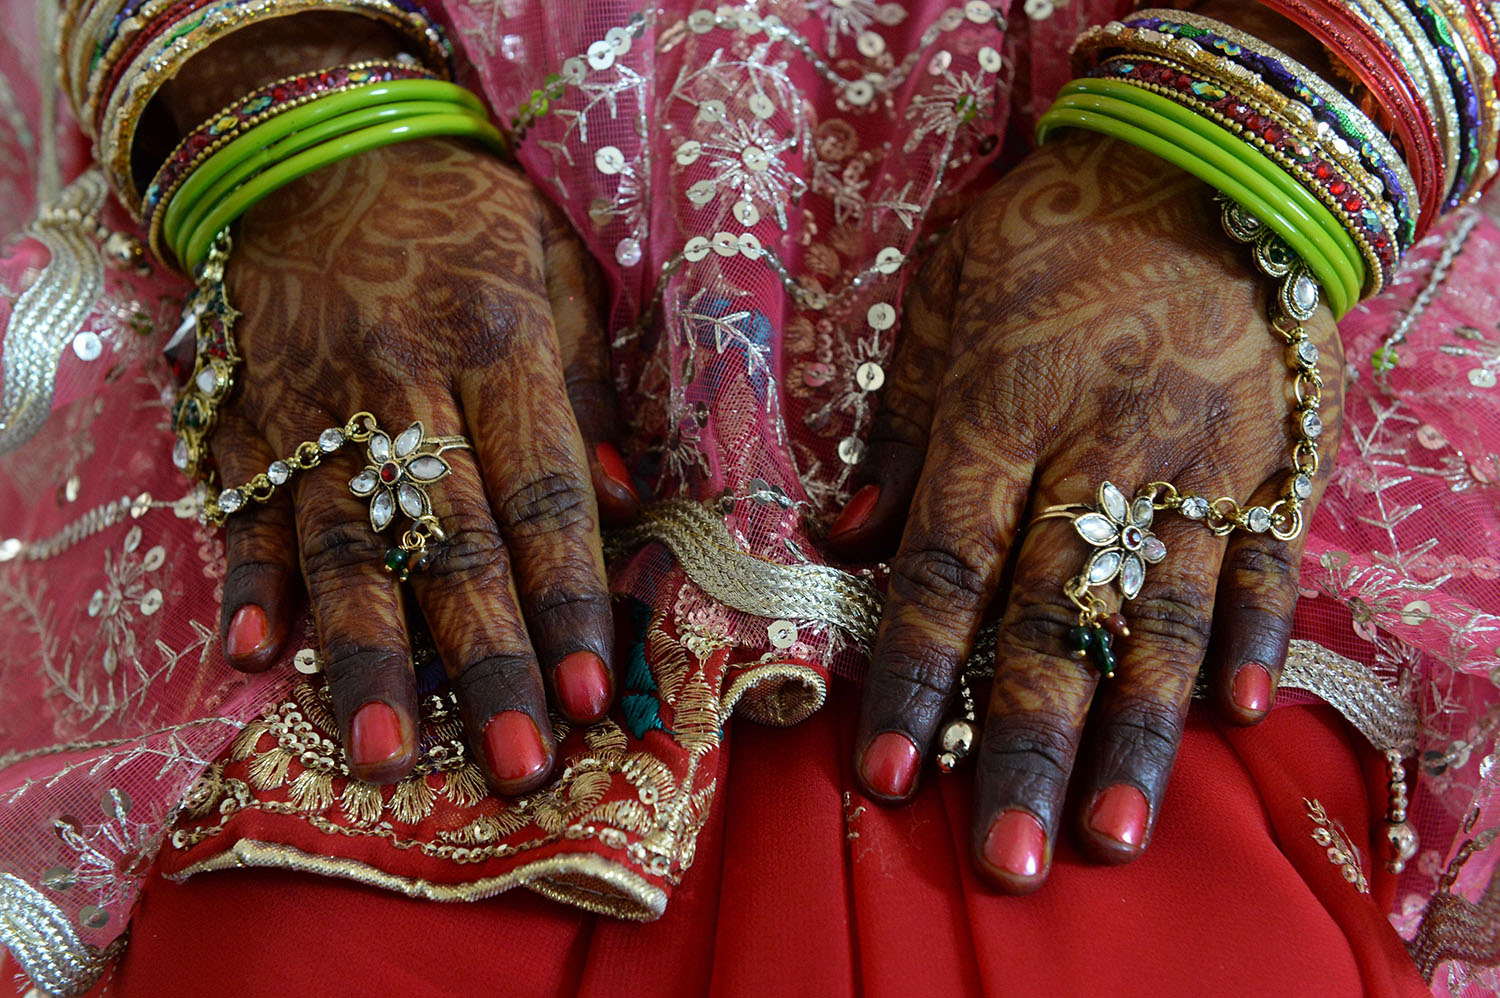 TOPSHOTS-INDIA-SOCIETY-MARRIAGE